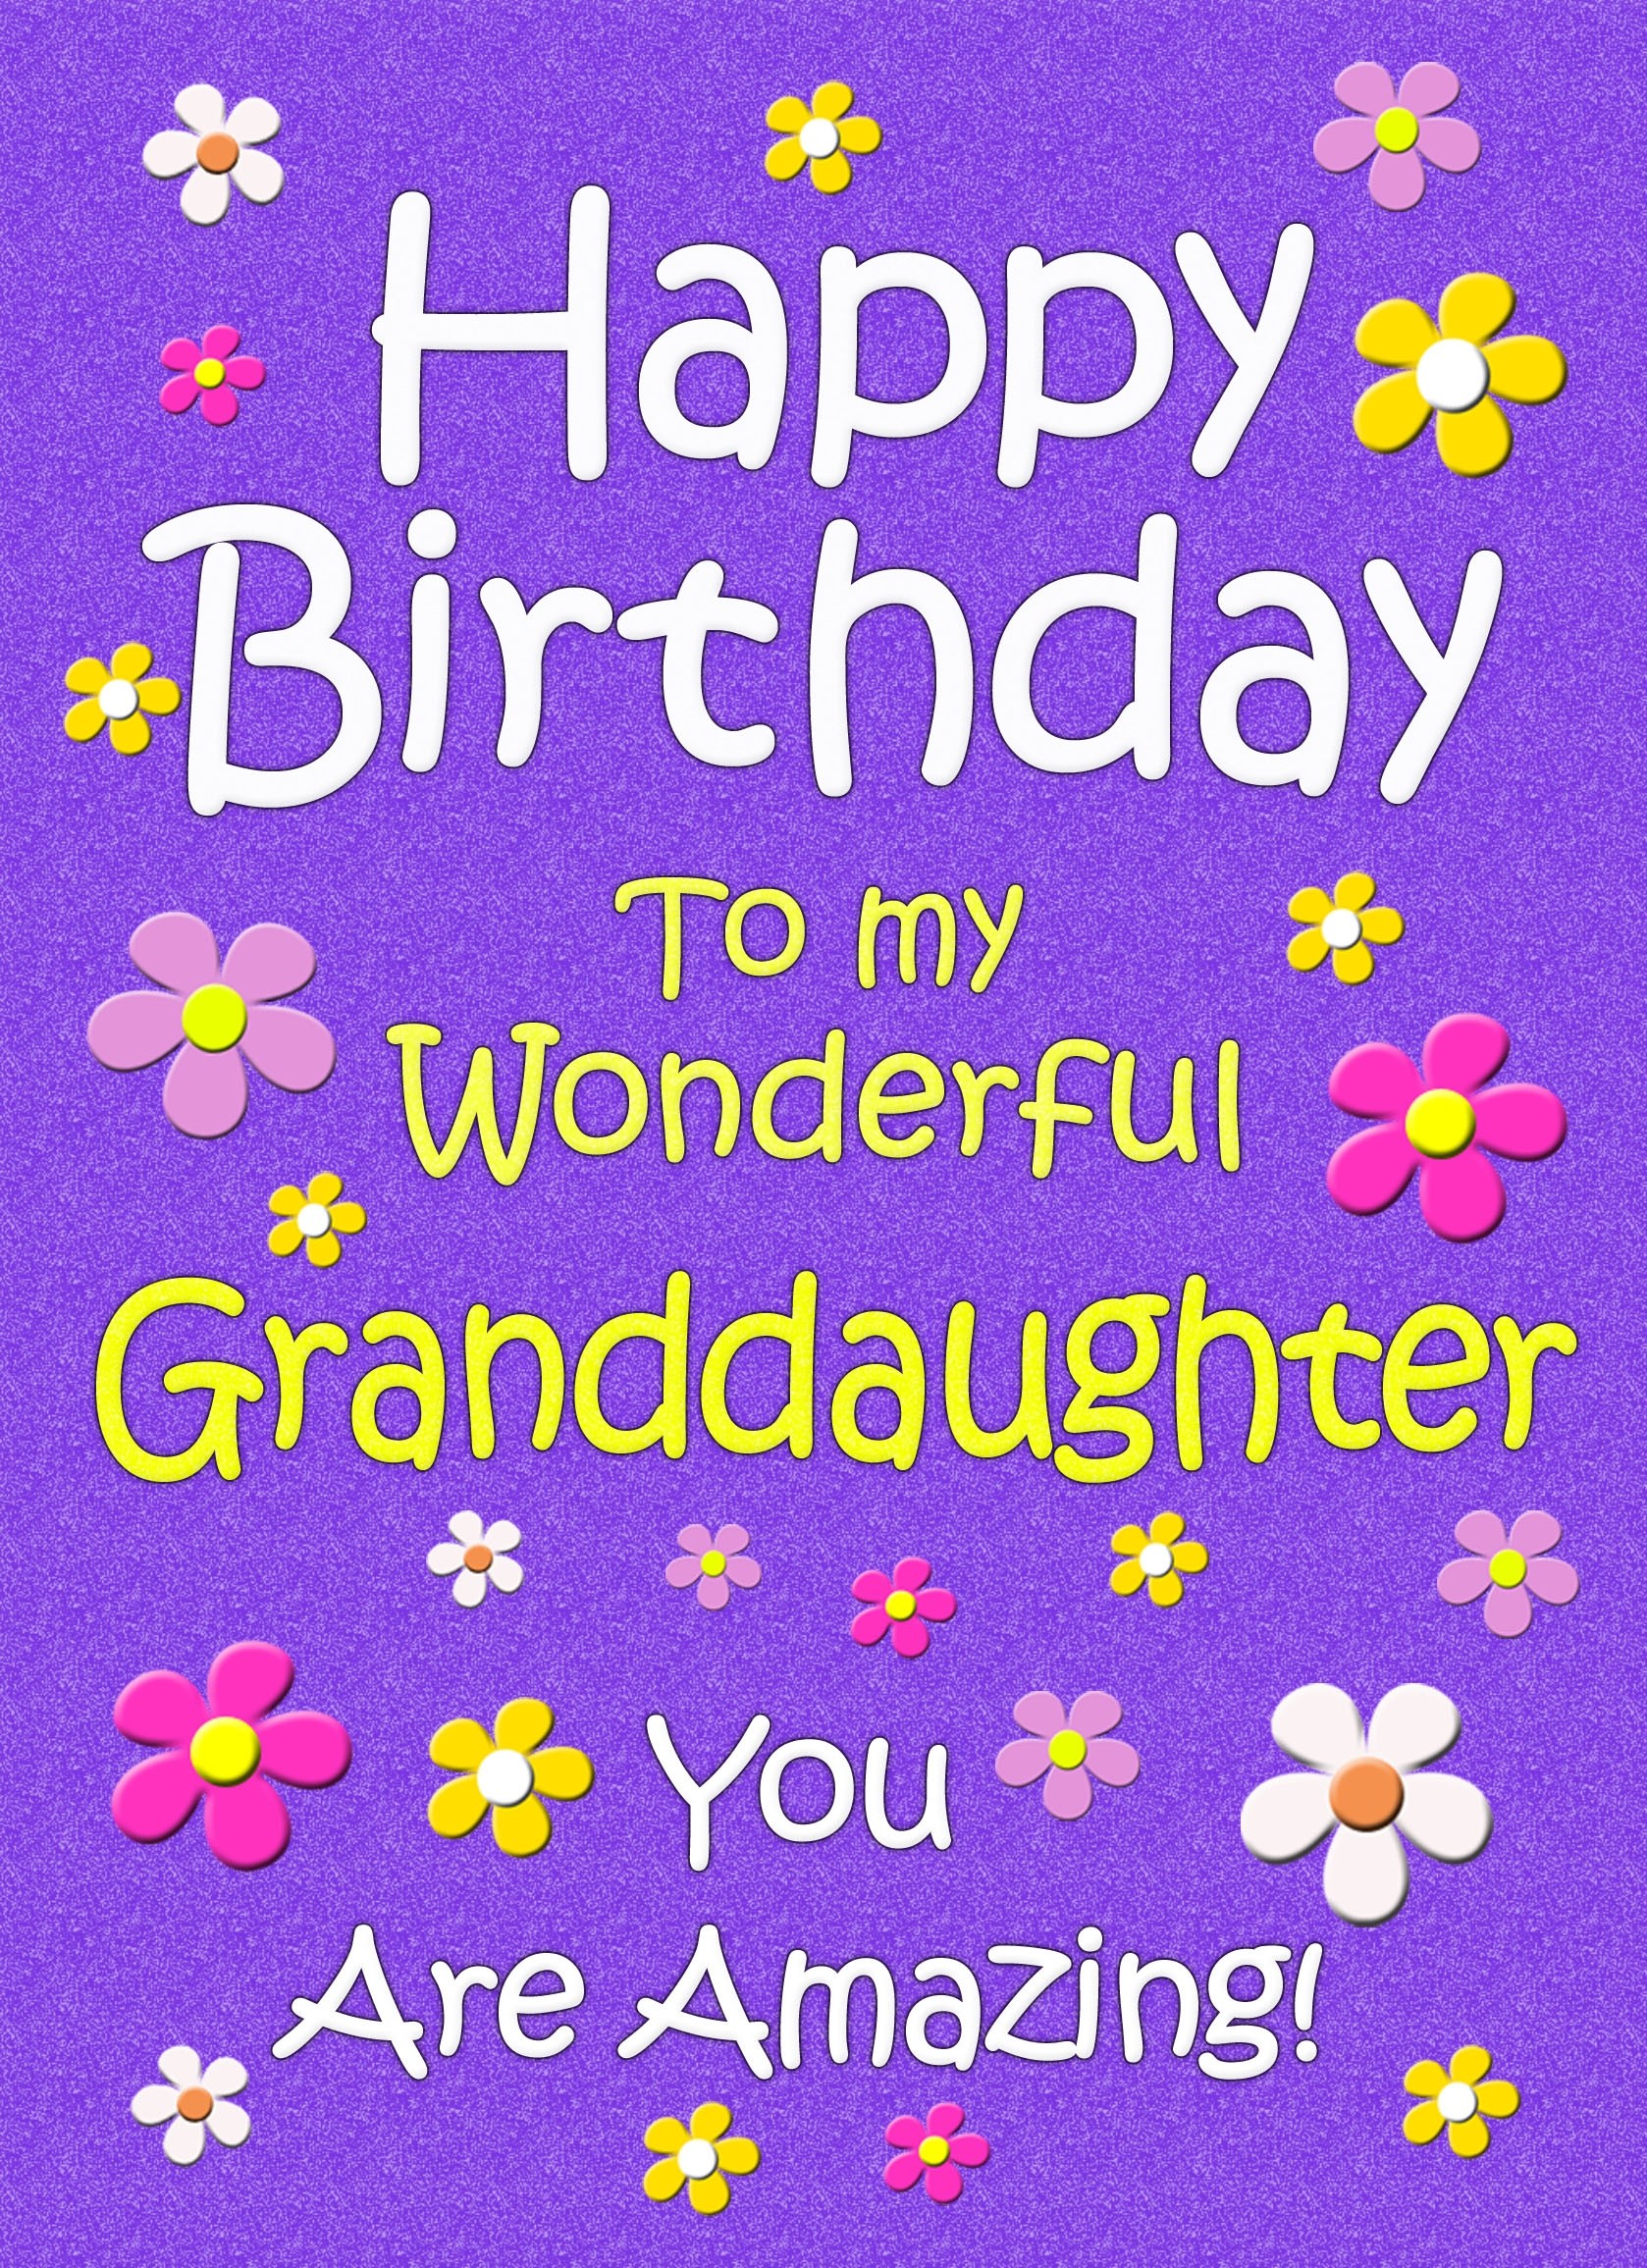 Granddaughter Birthday Card (Purple)